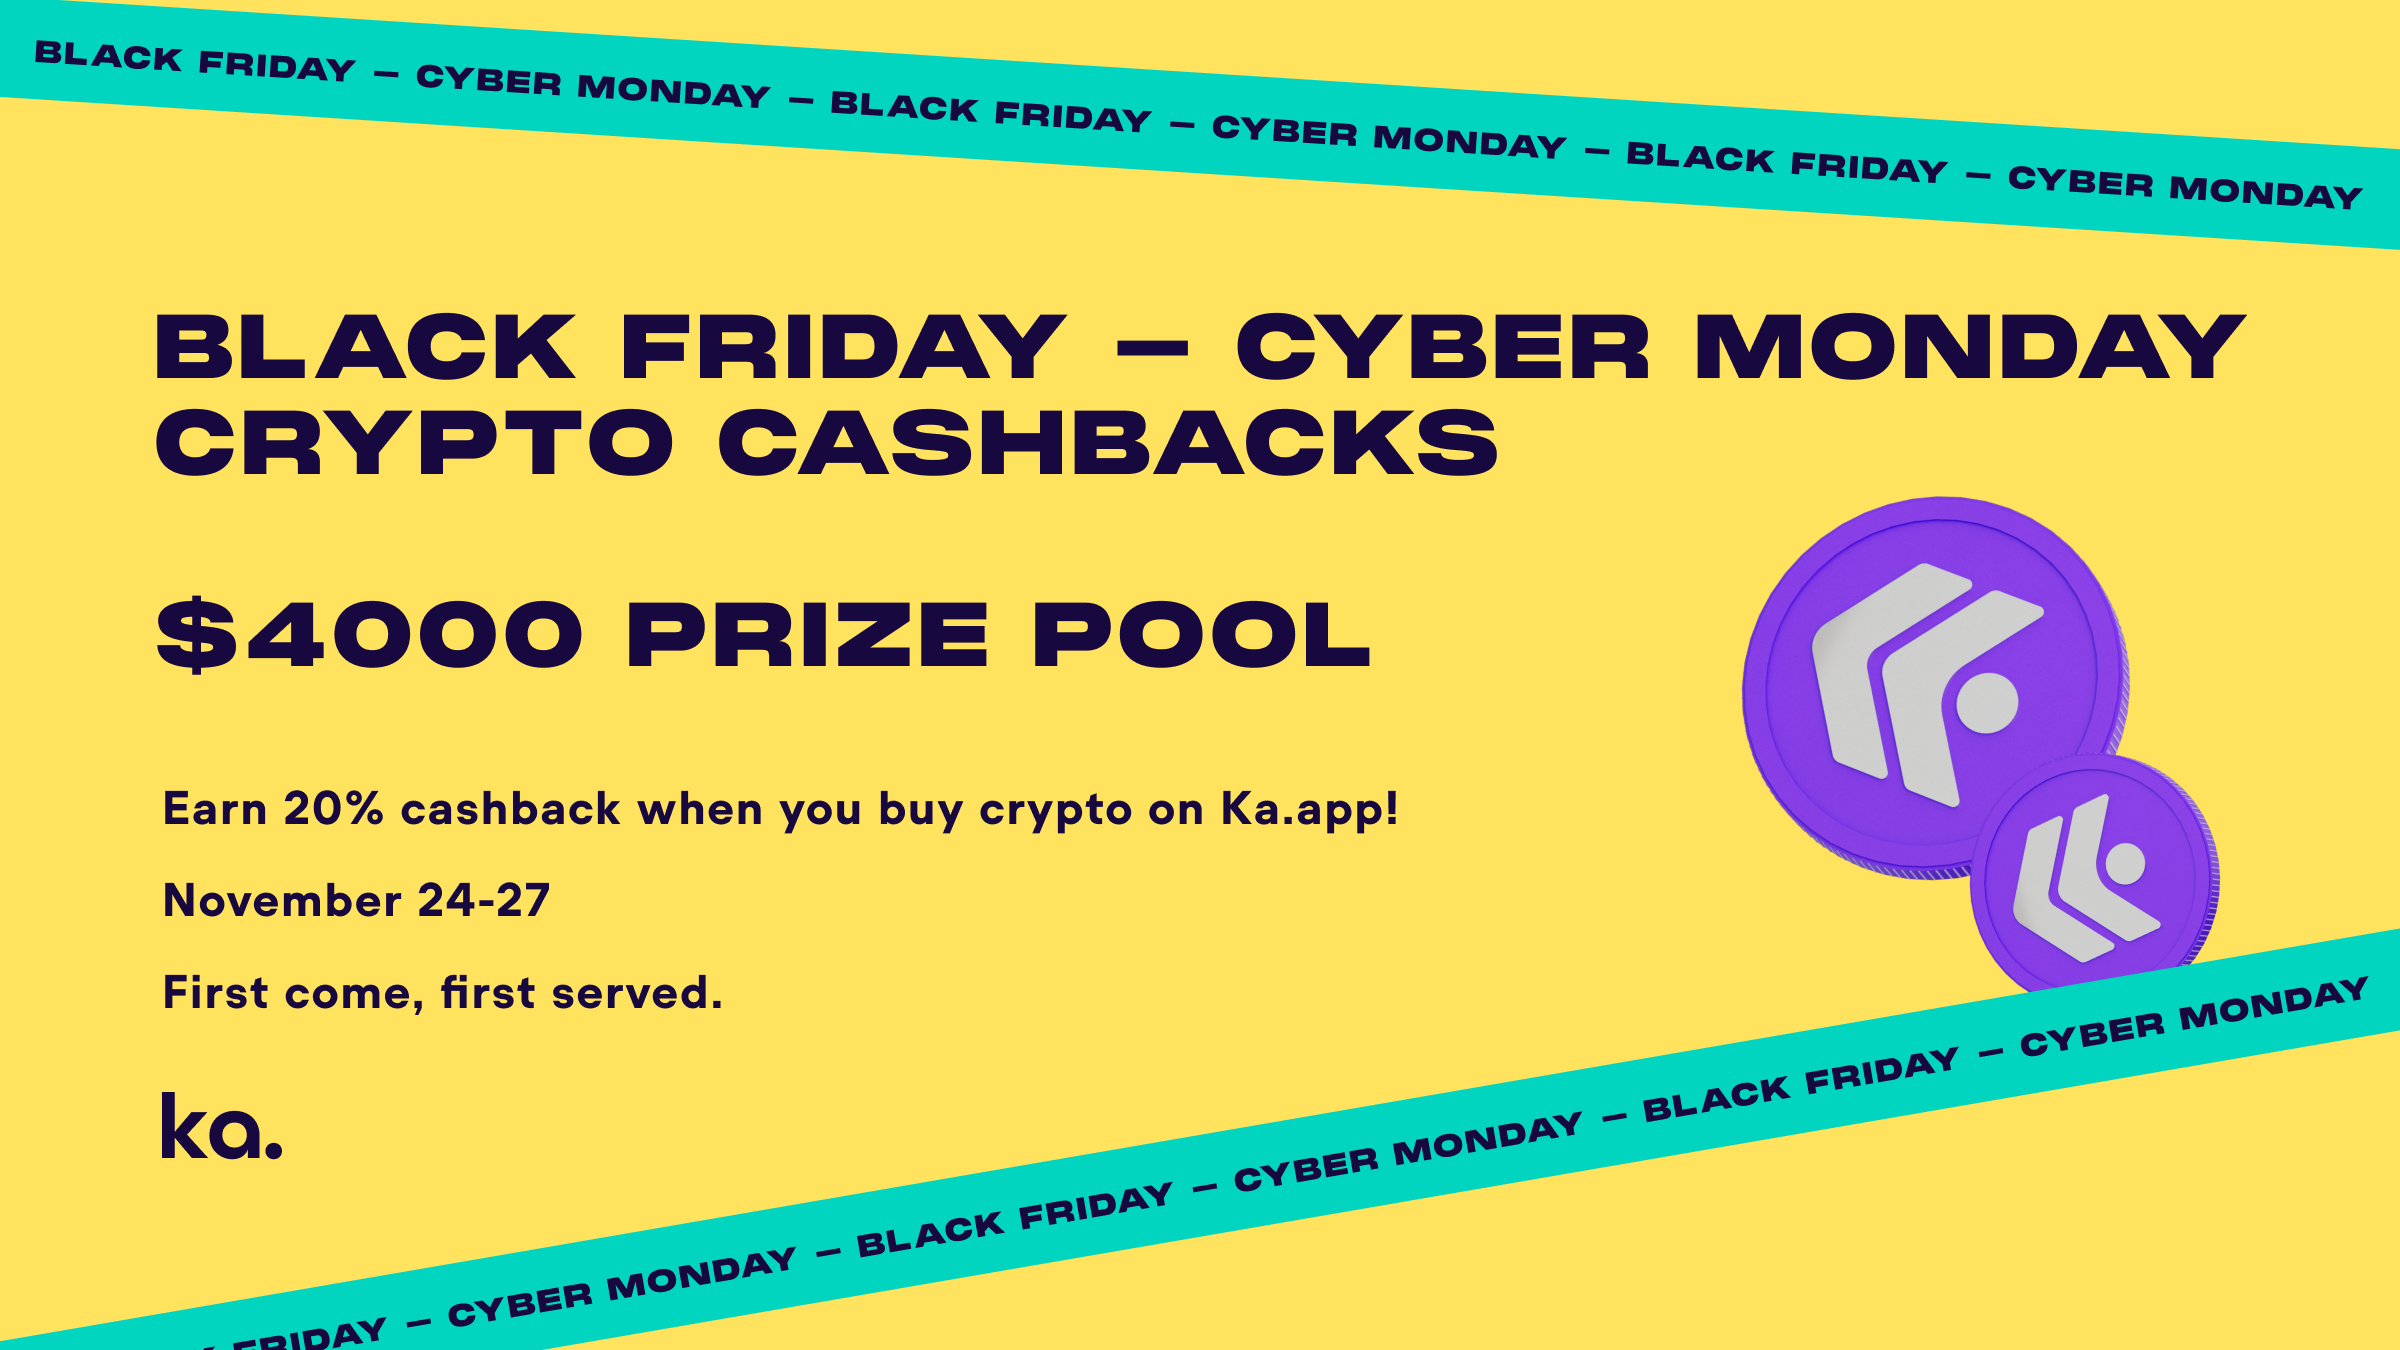 Get 20% Cashback: Black Friday to Cyber Monday Promo